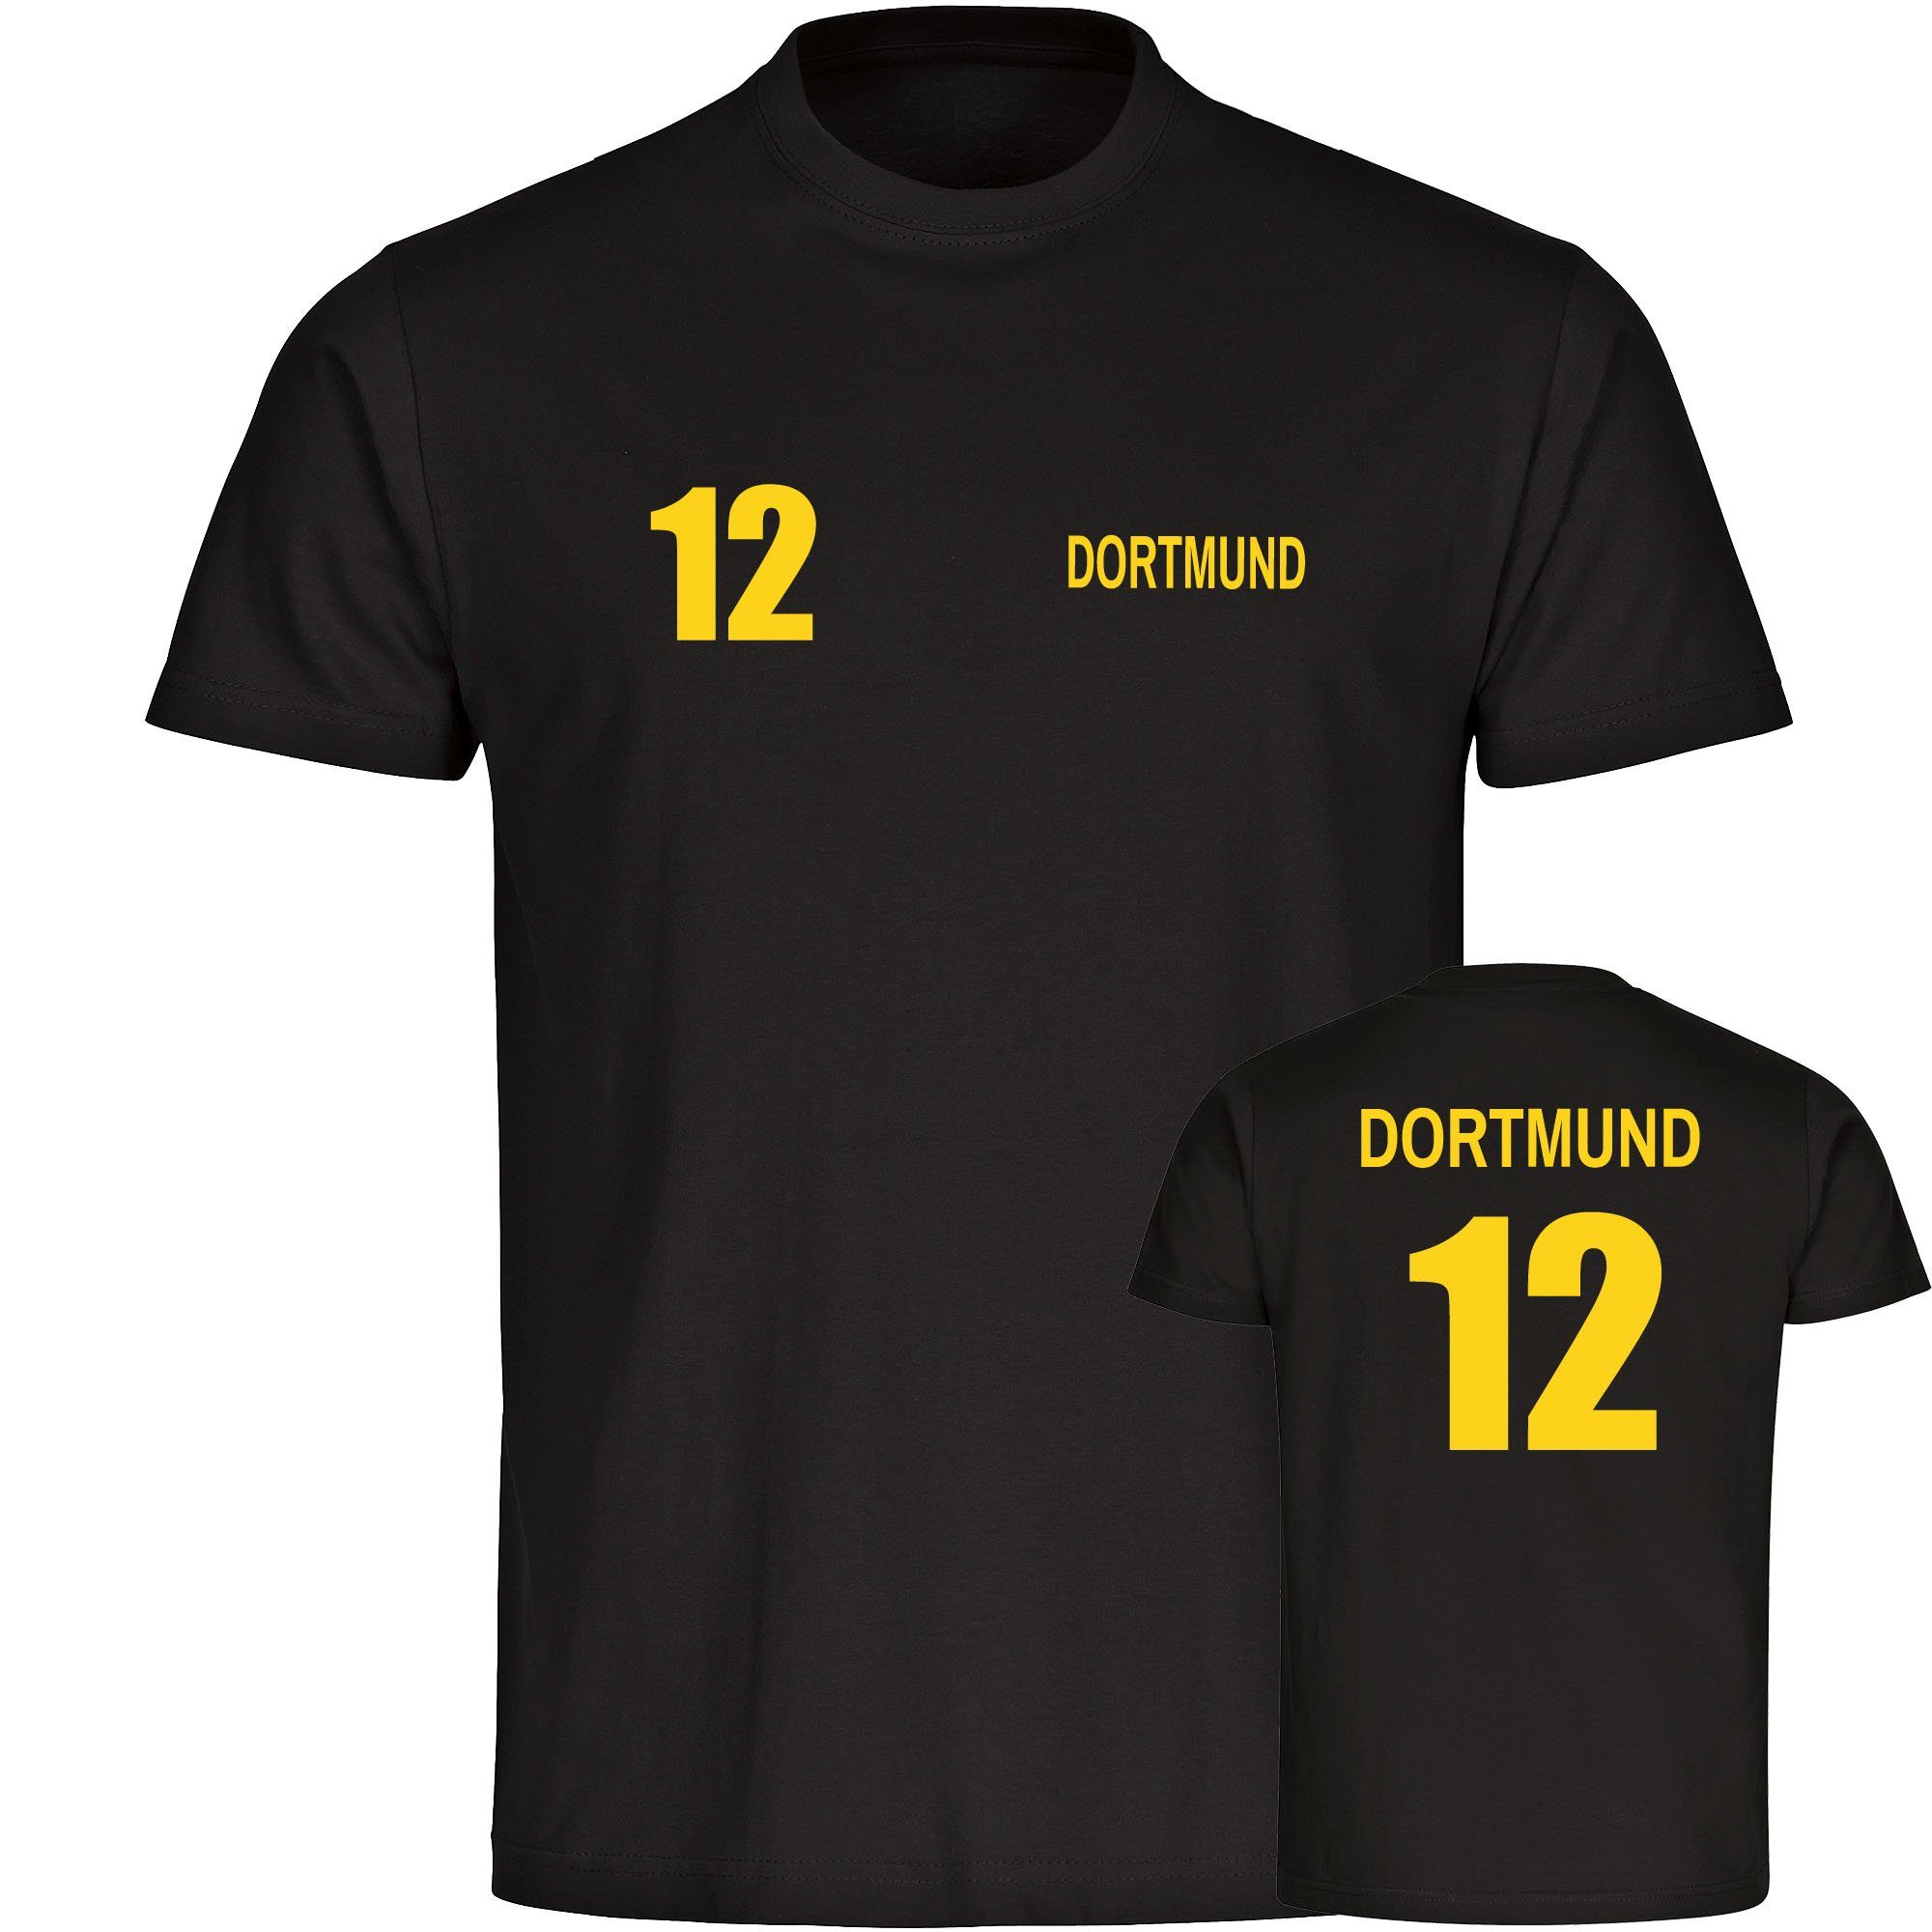 multifanshop T-Shirt Herren Dortmund - Trikot 12 - Männer